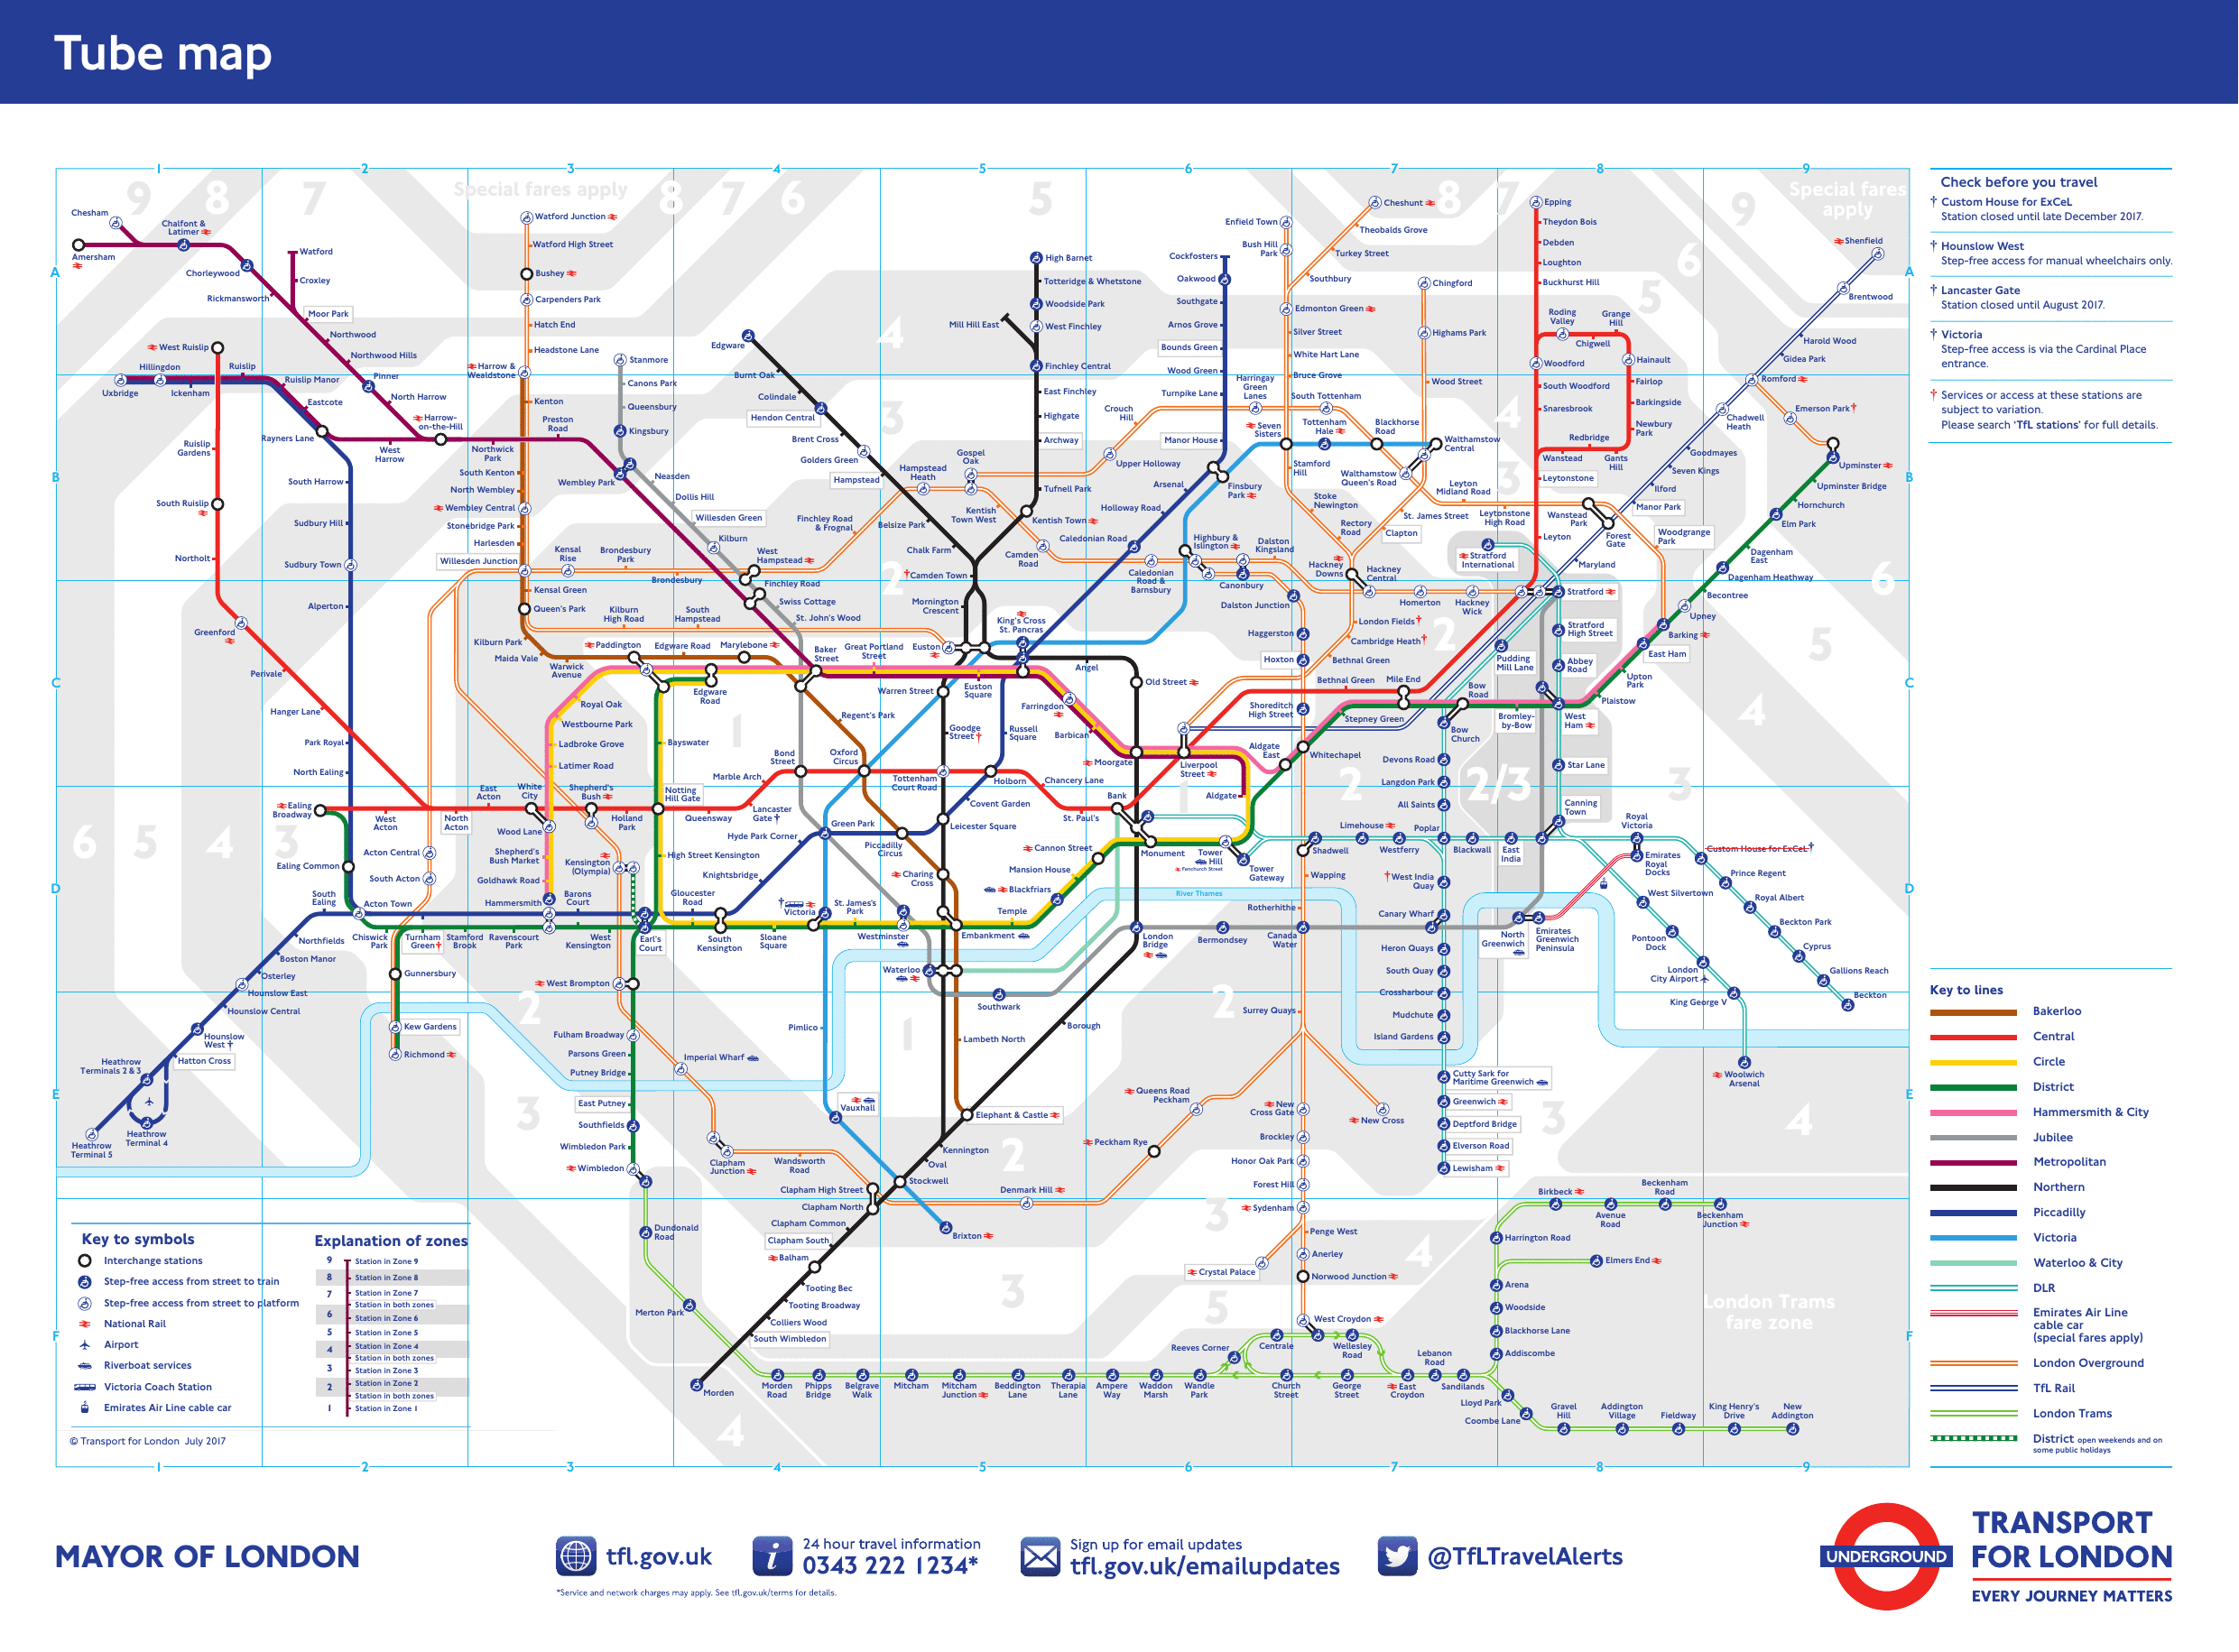 London's tube map